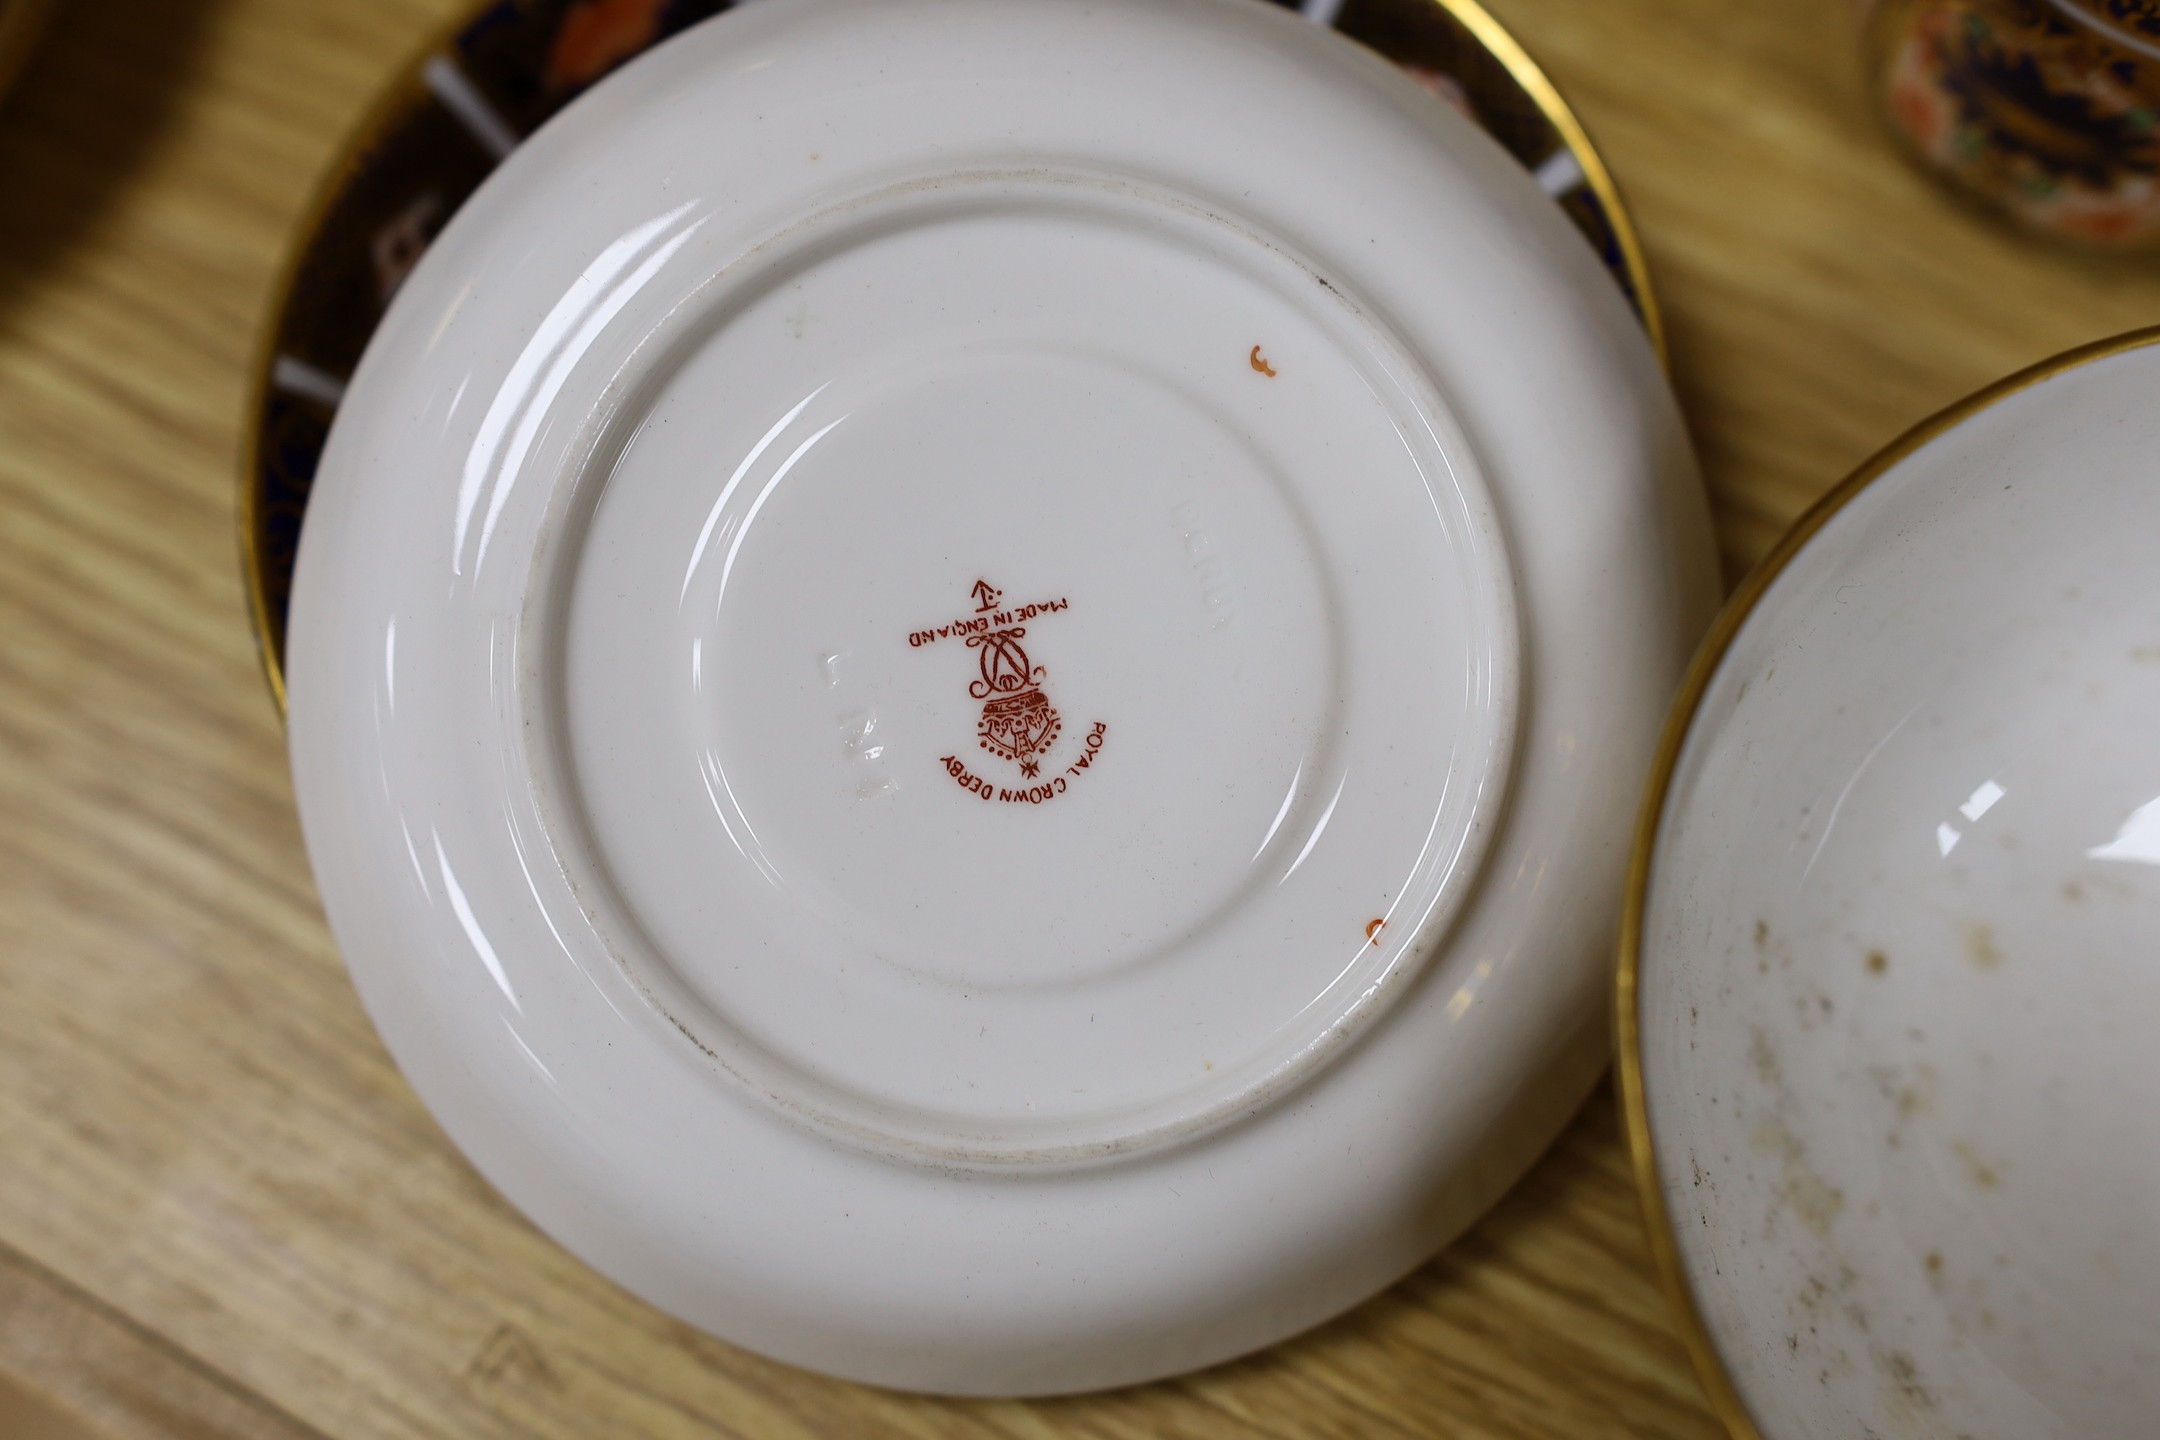 A quantity of Royal Crown Derby Imari pattern porcelain tea / dinner wares